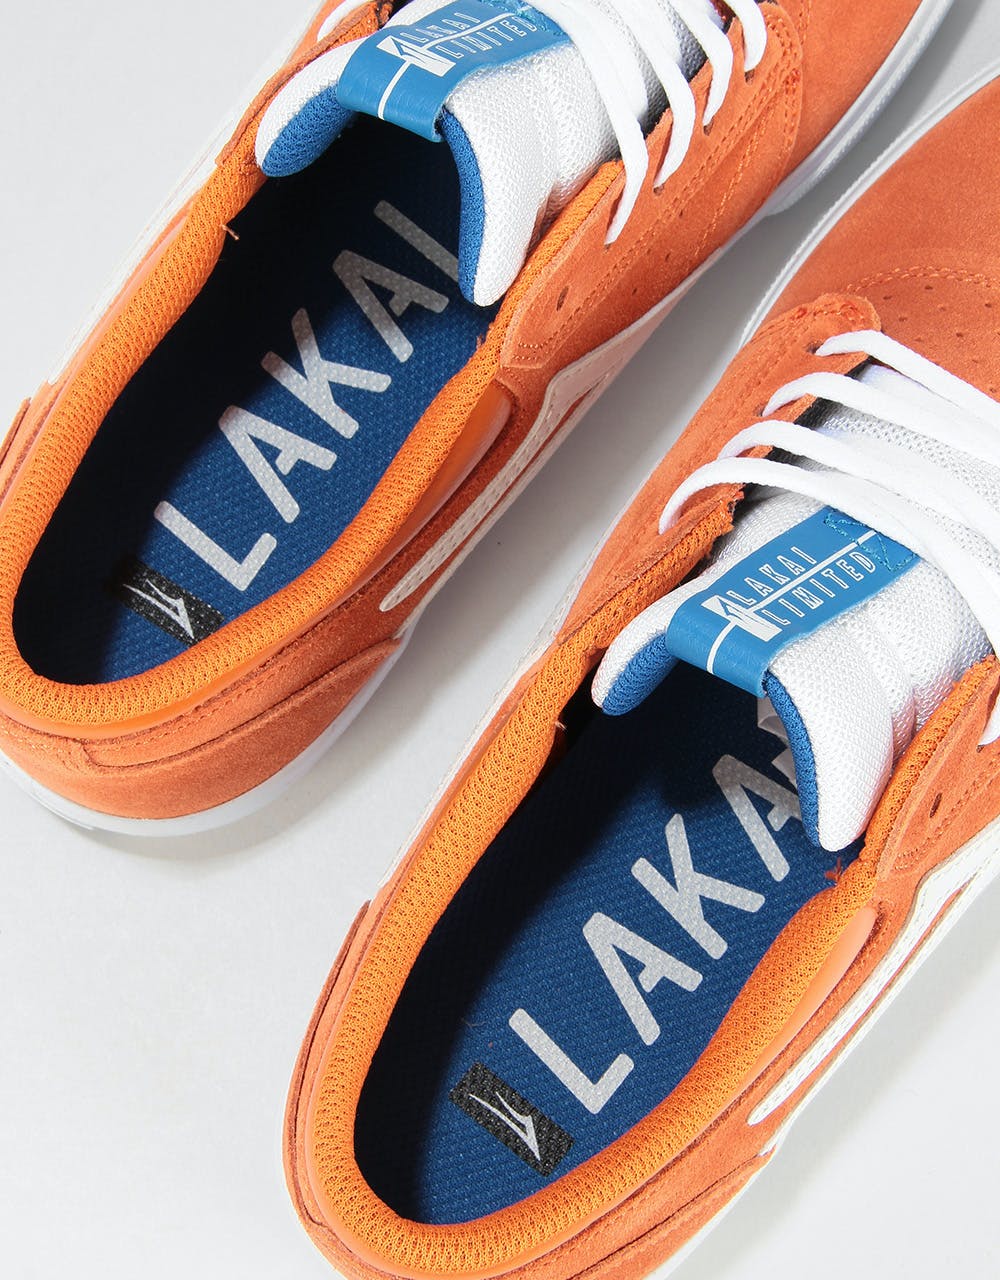 Lakai Griffin Skate Shoes - Orange Suede